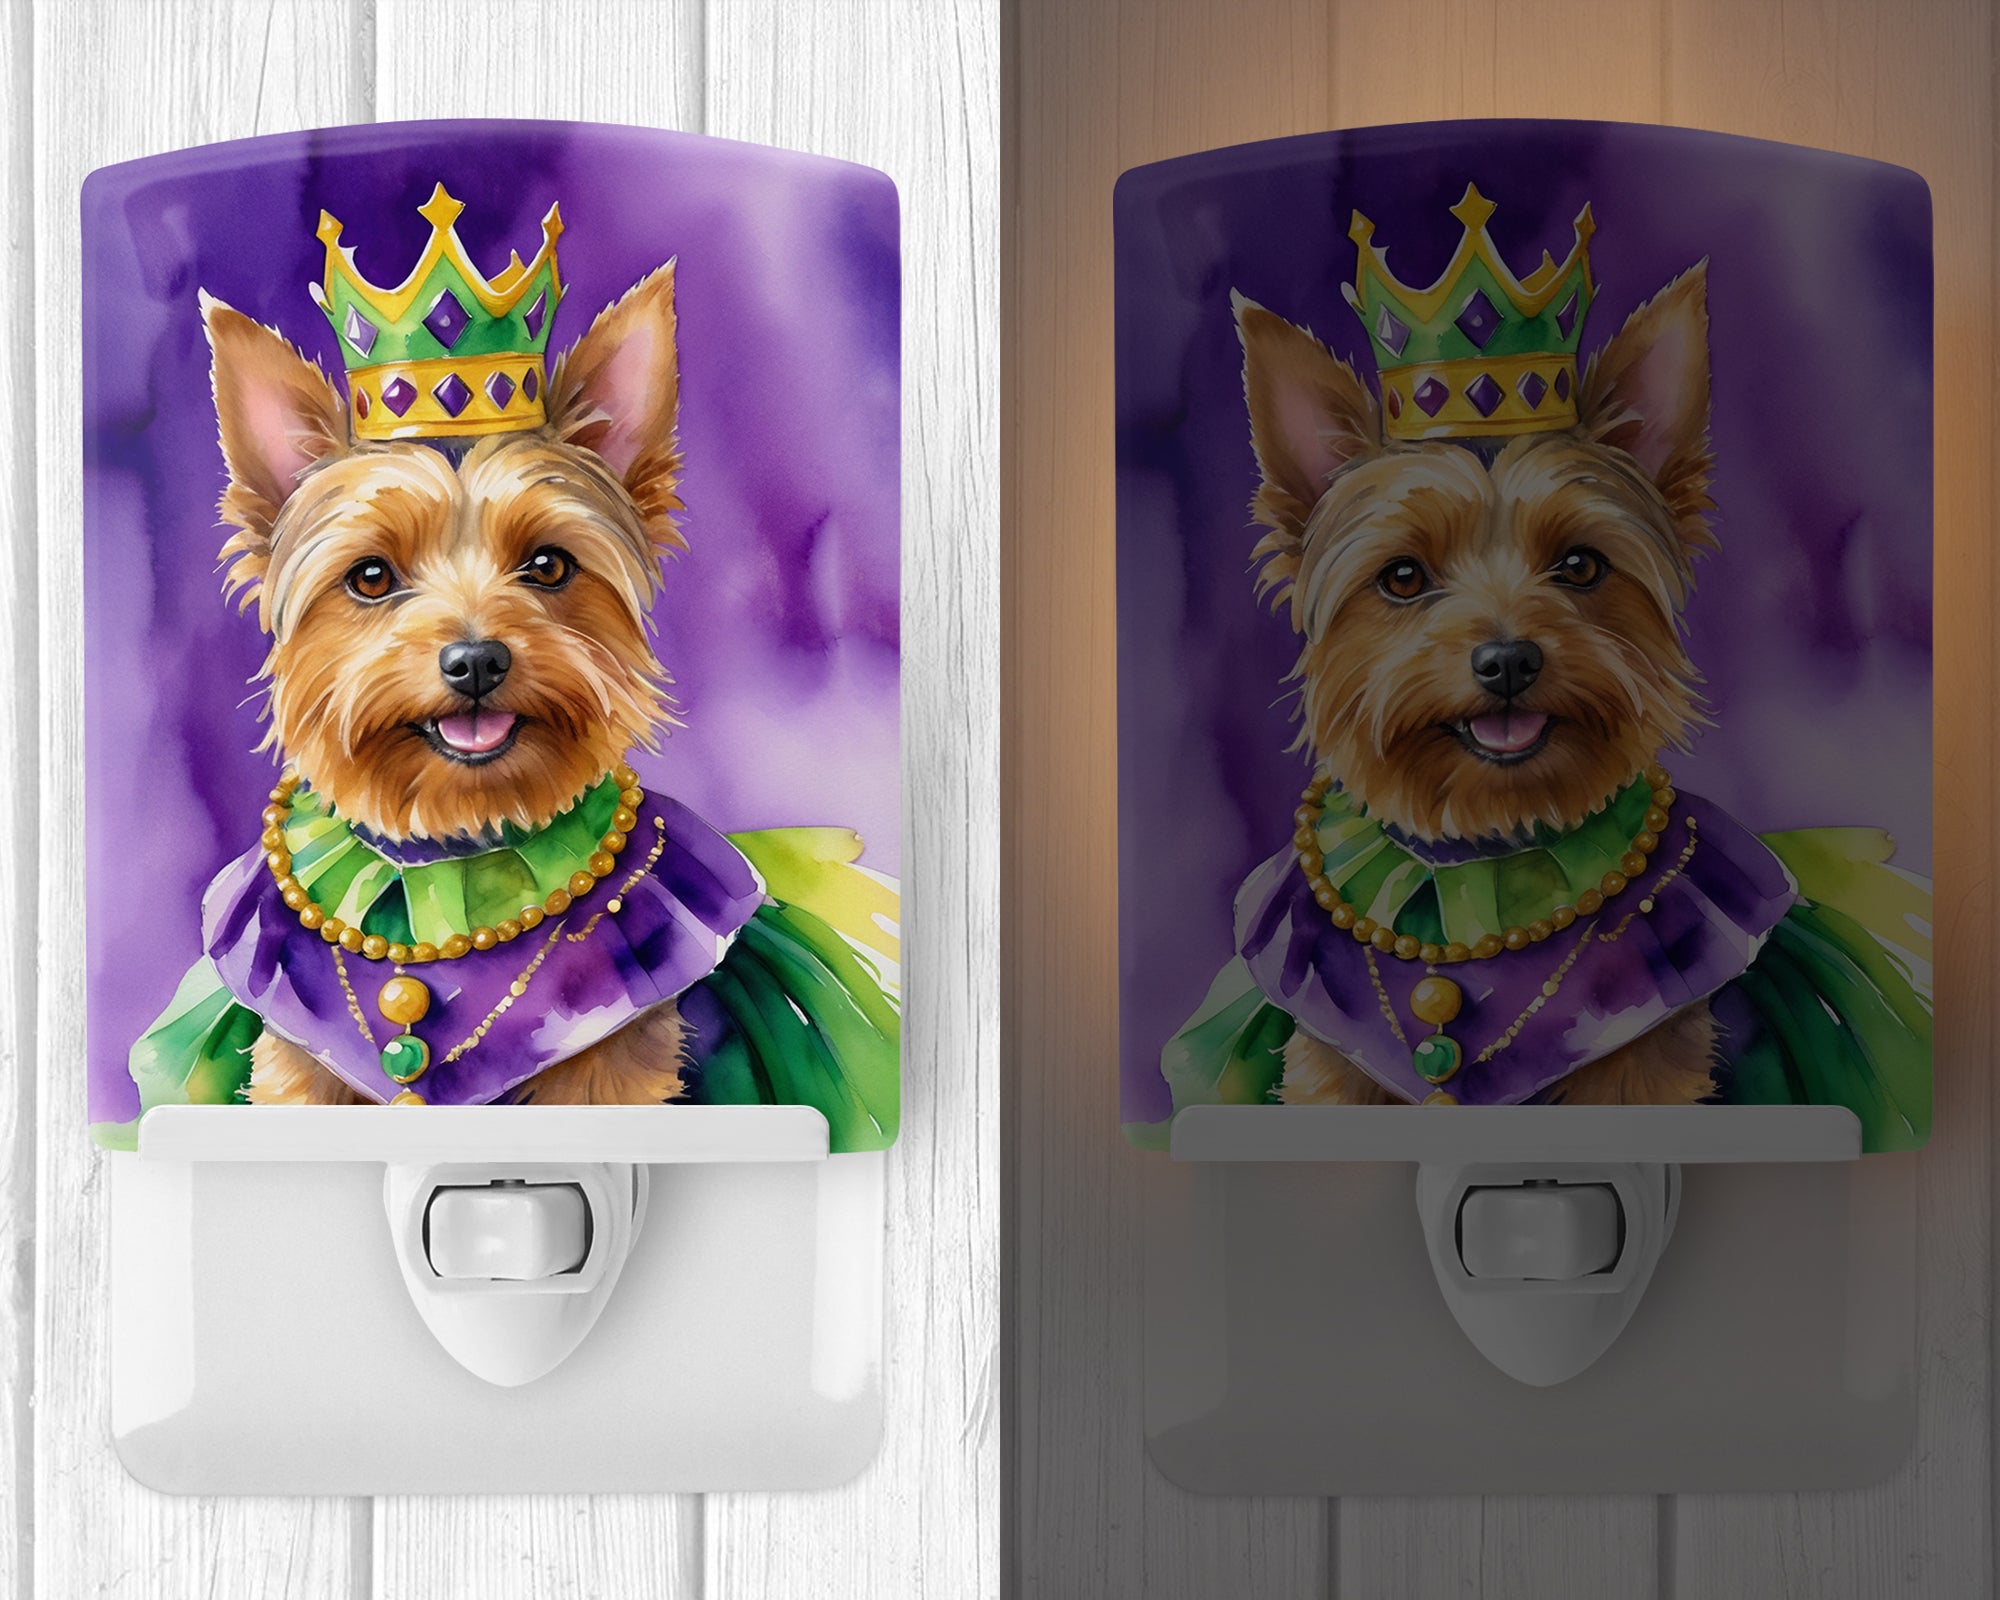 Buy this Australian Terrier King of Mardi Gras Ceramic Night Light